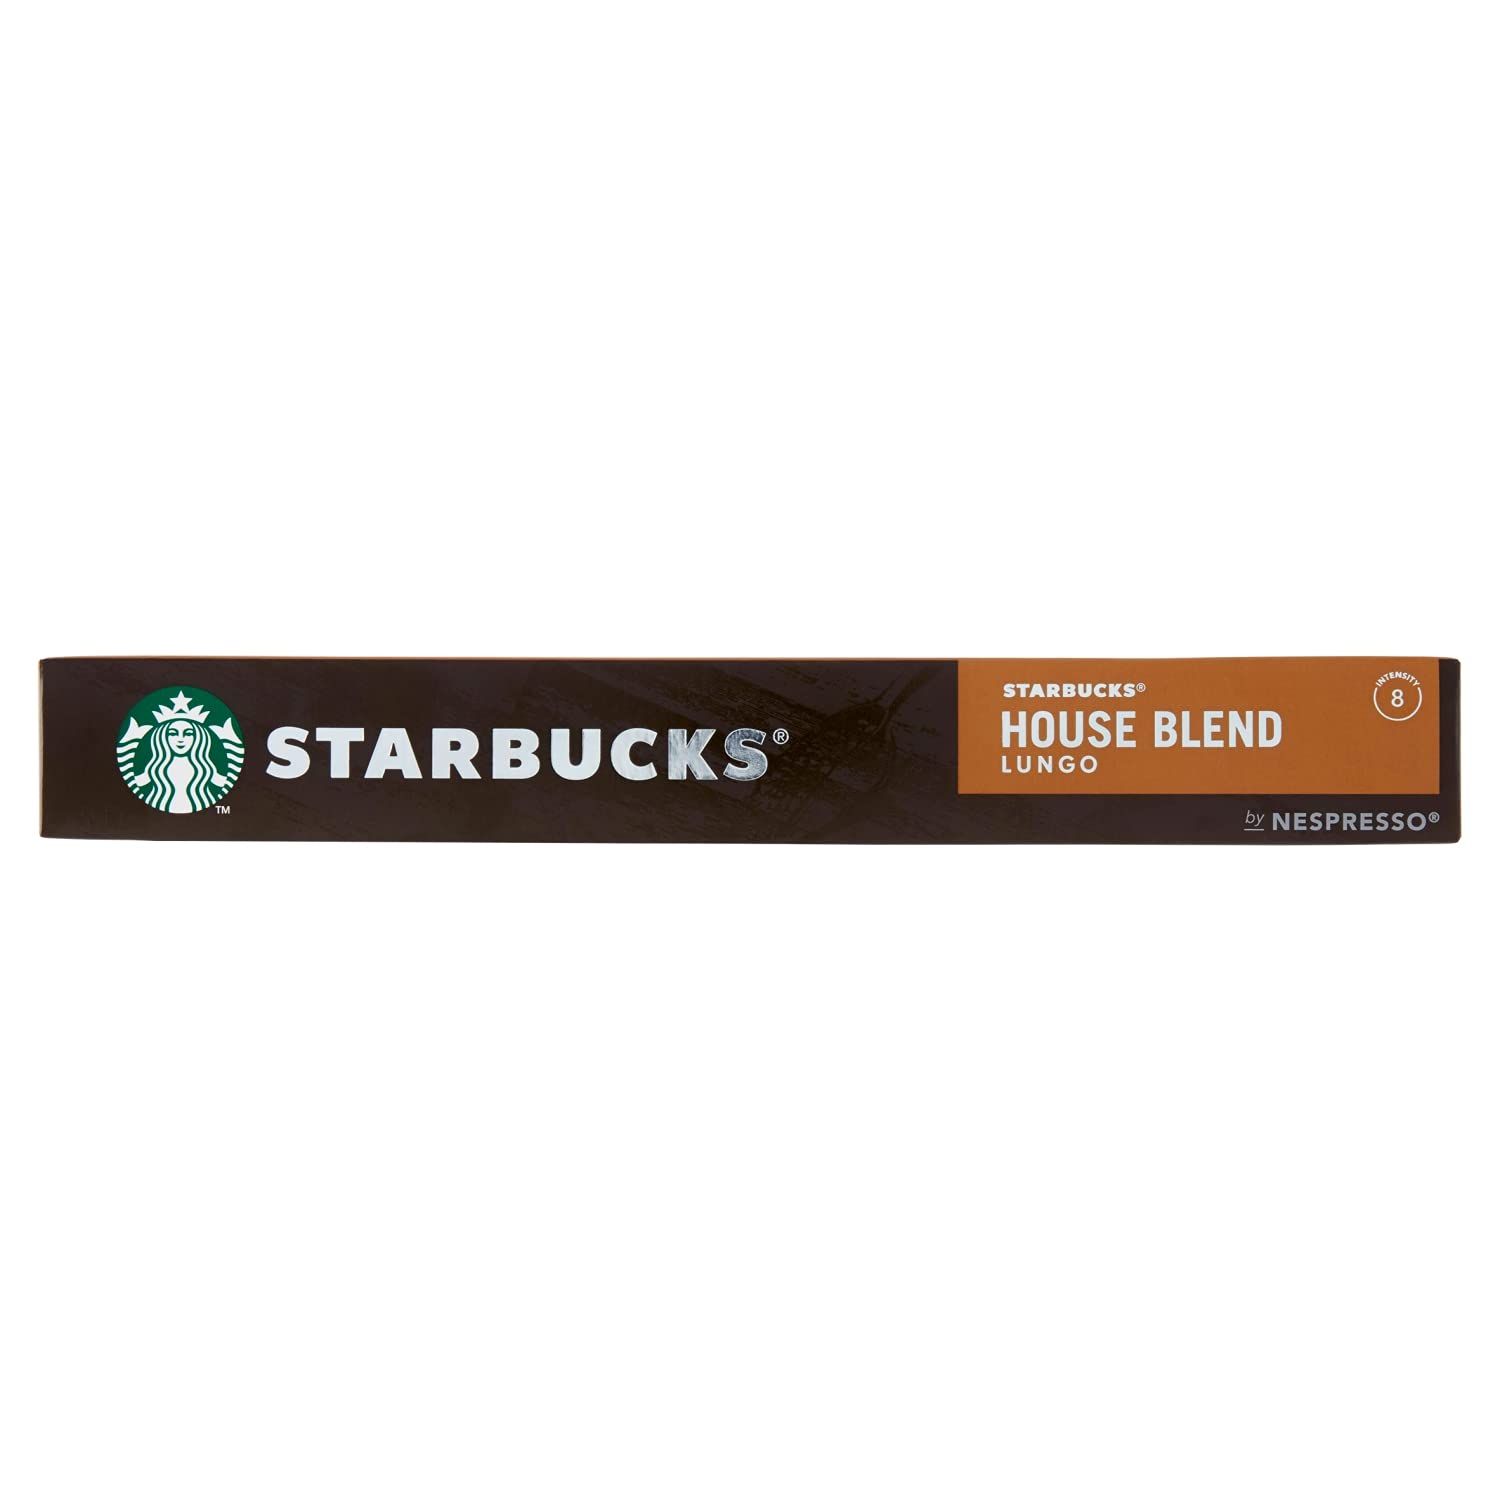 Starbuck's House Blend Lungo Nespresso Coffee Image